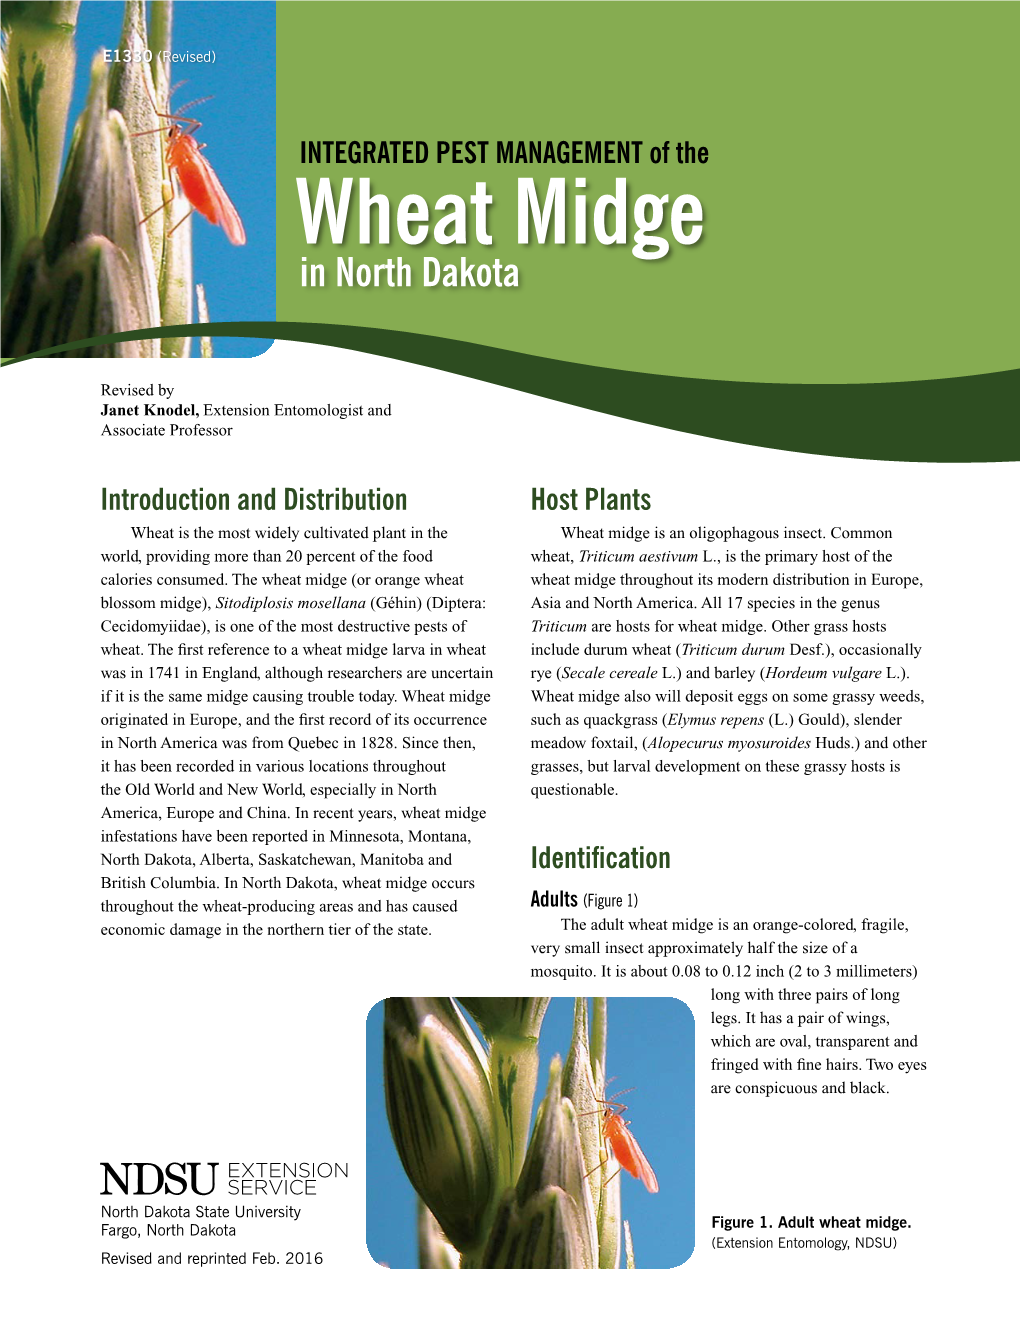 Integrated Pest Management of the Wheat Midge in North Dakota